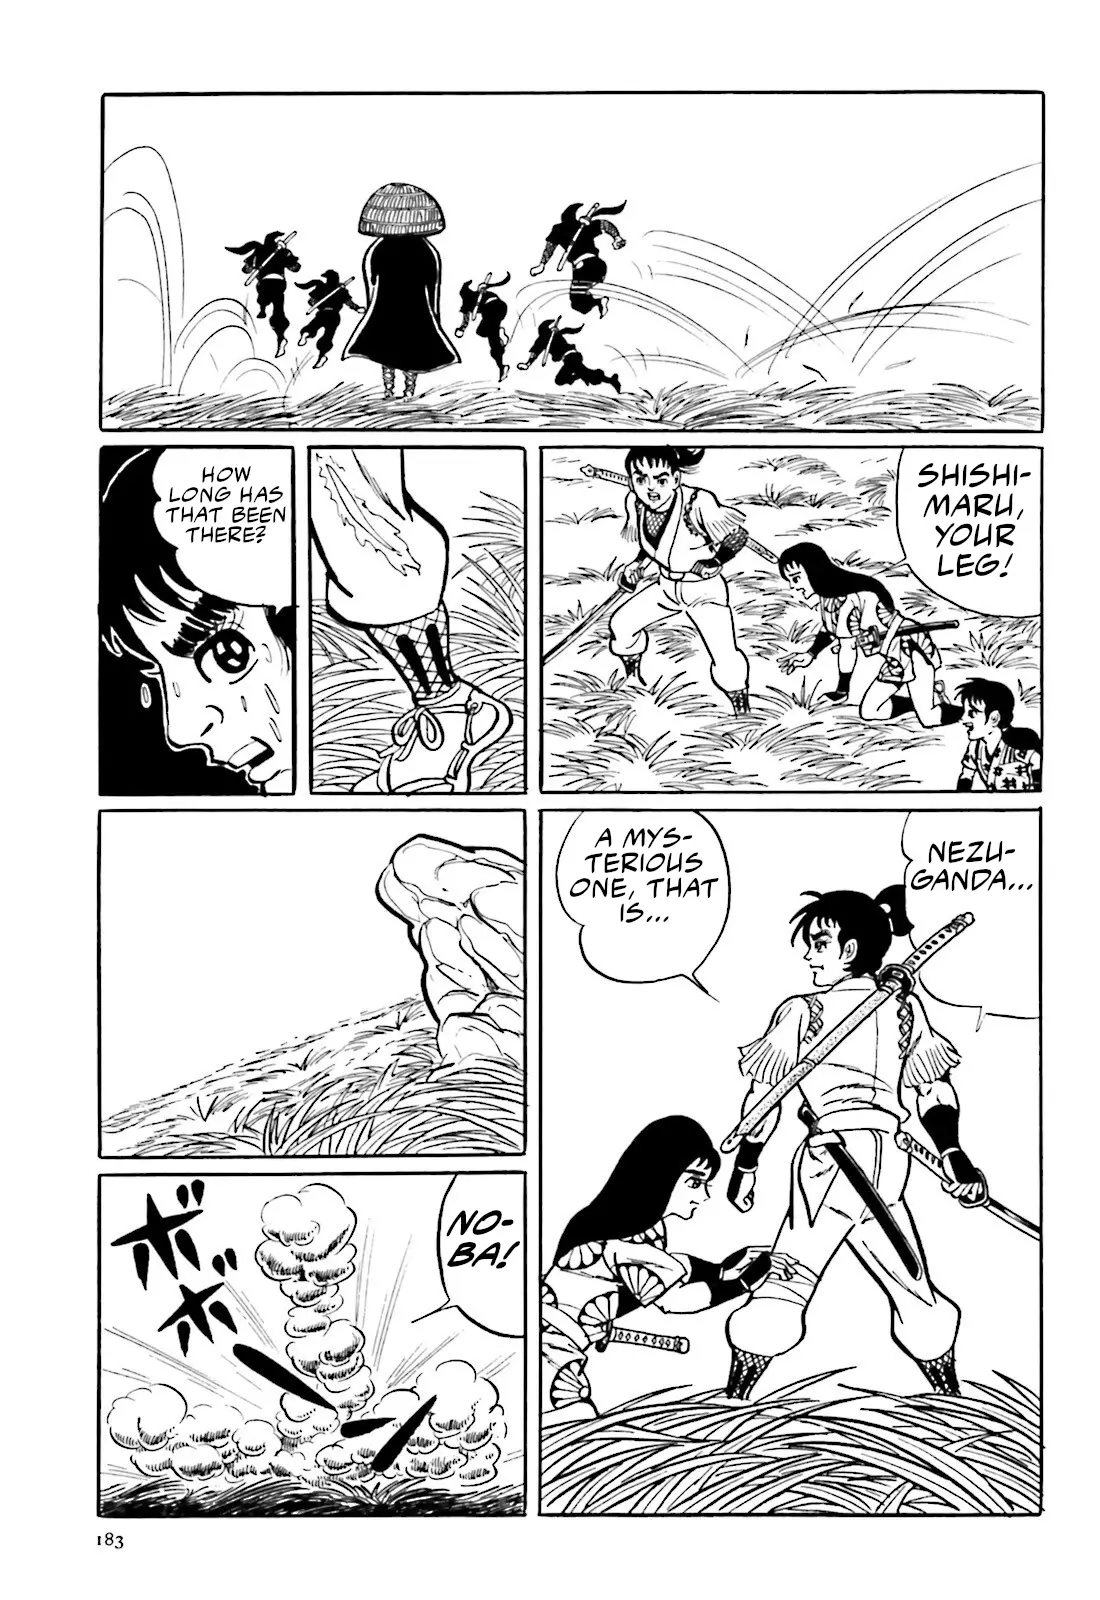 The Vigilant Lionmaru - 4 page 19-4883fa8d